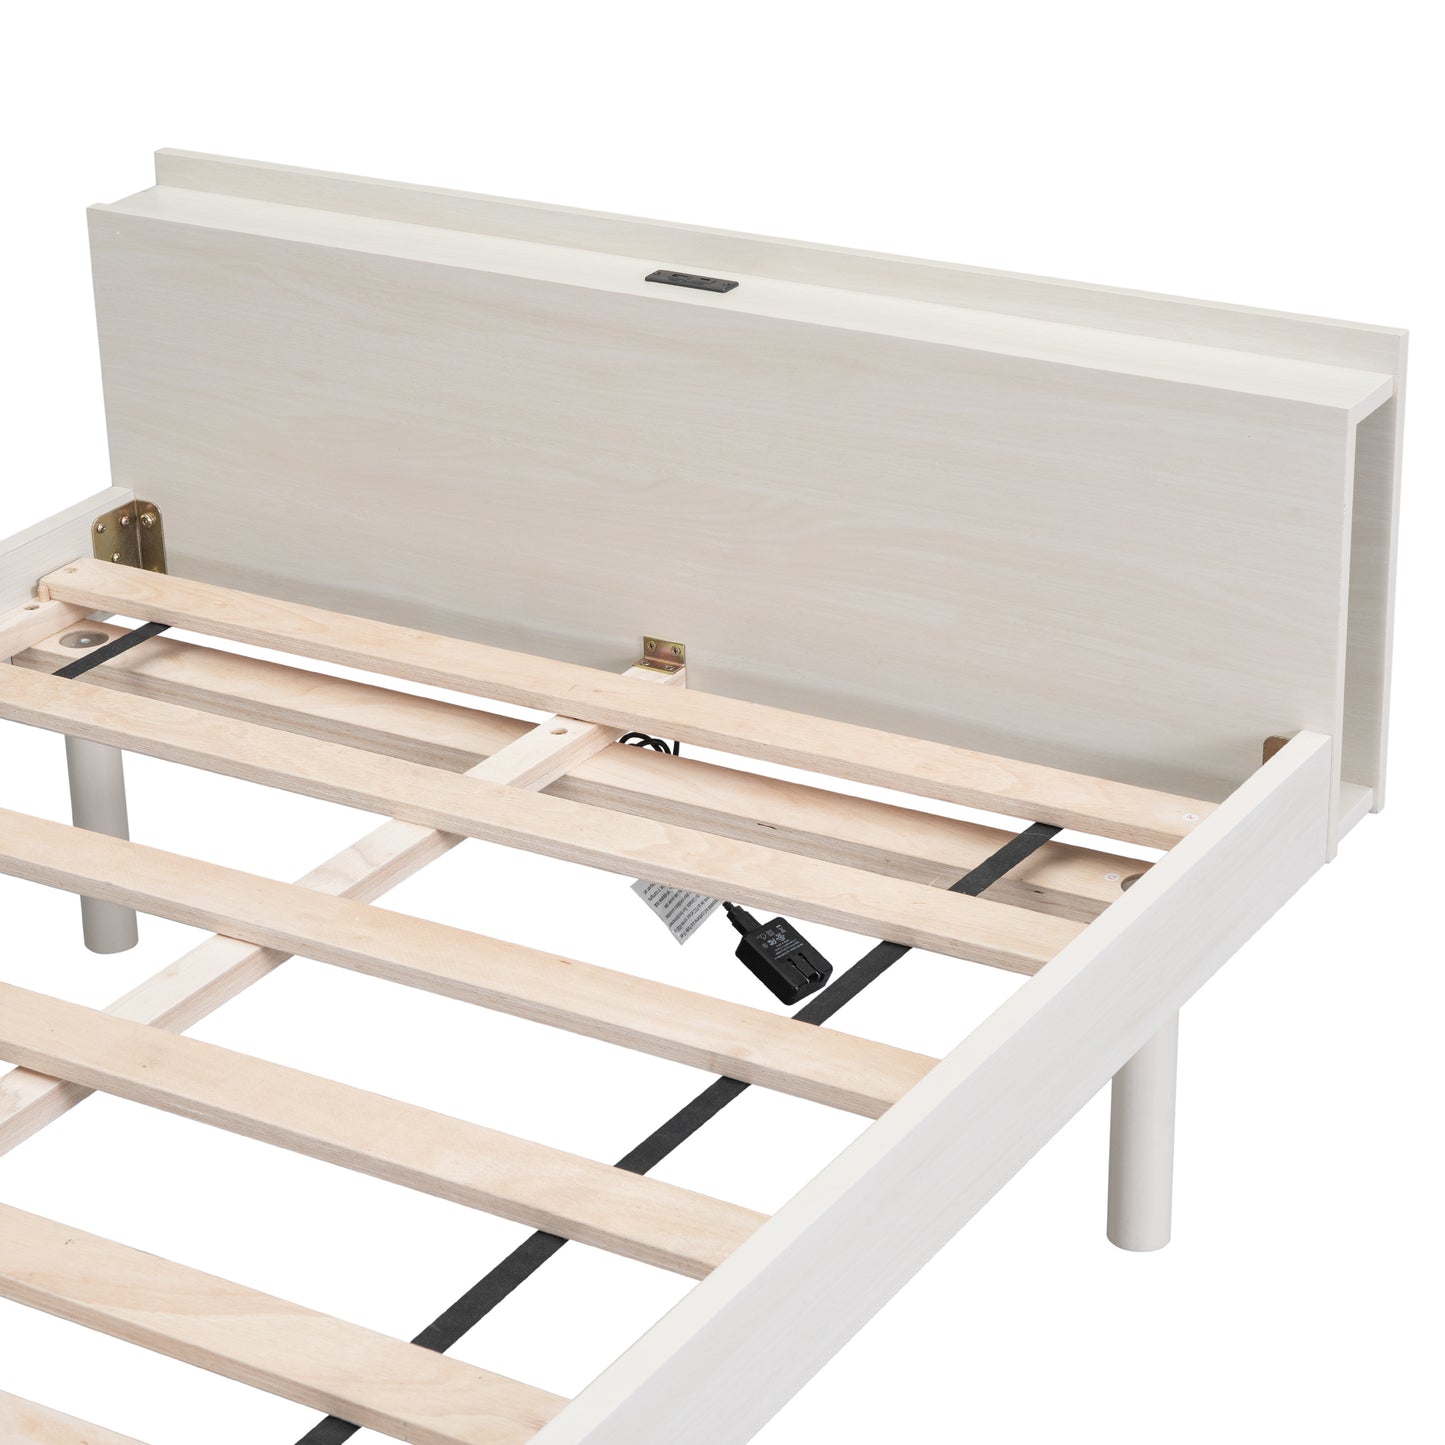 Modern Design Twin Size Platform Bed Frame with USB Ports for White Washed Color